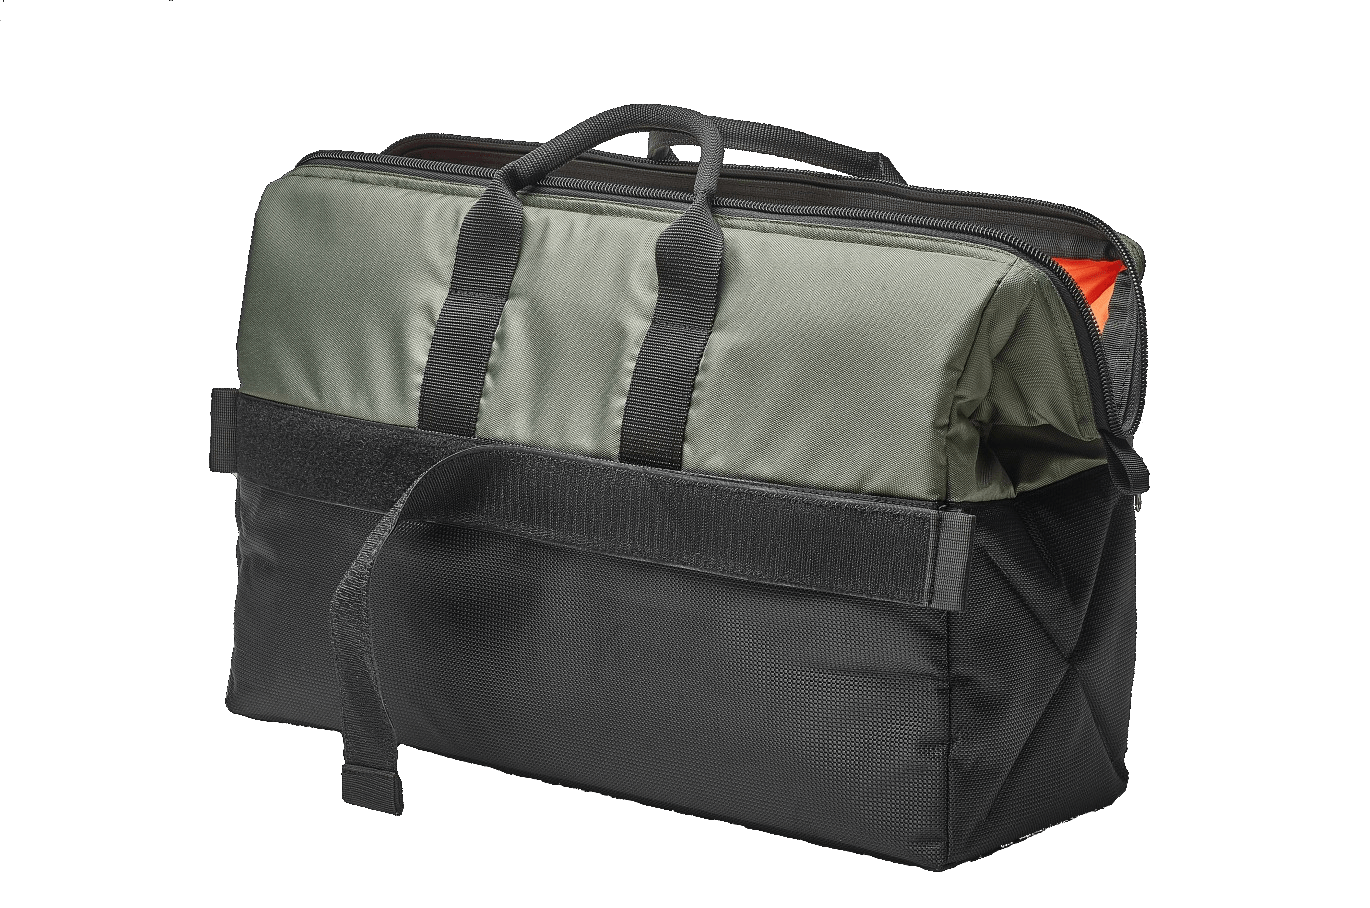 TrendBy Dumpin Trunk Travel Bag in Black-green